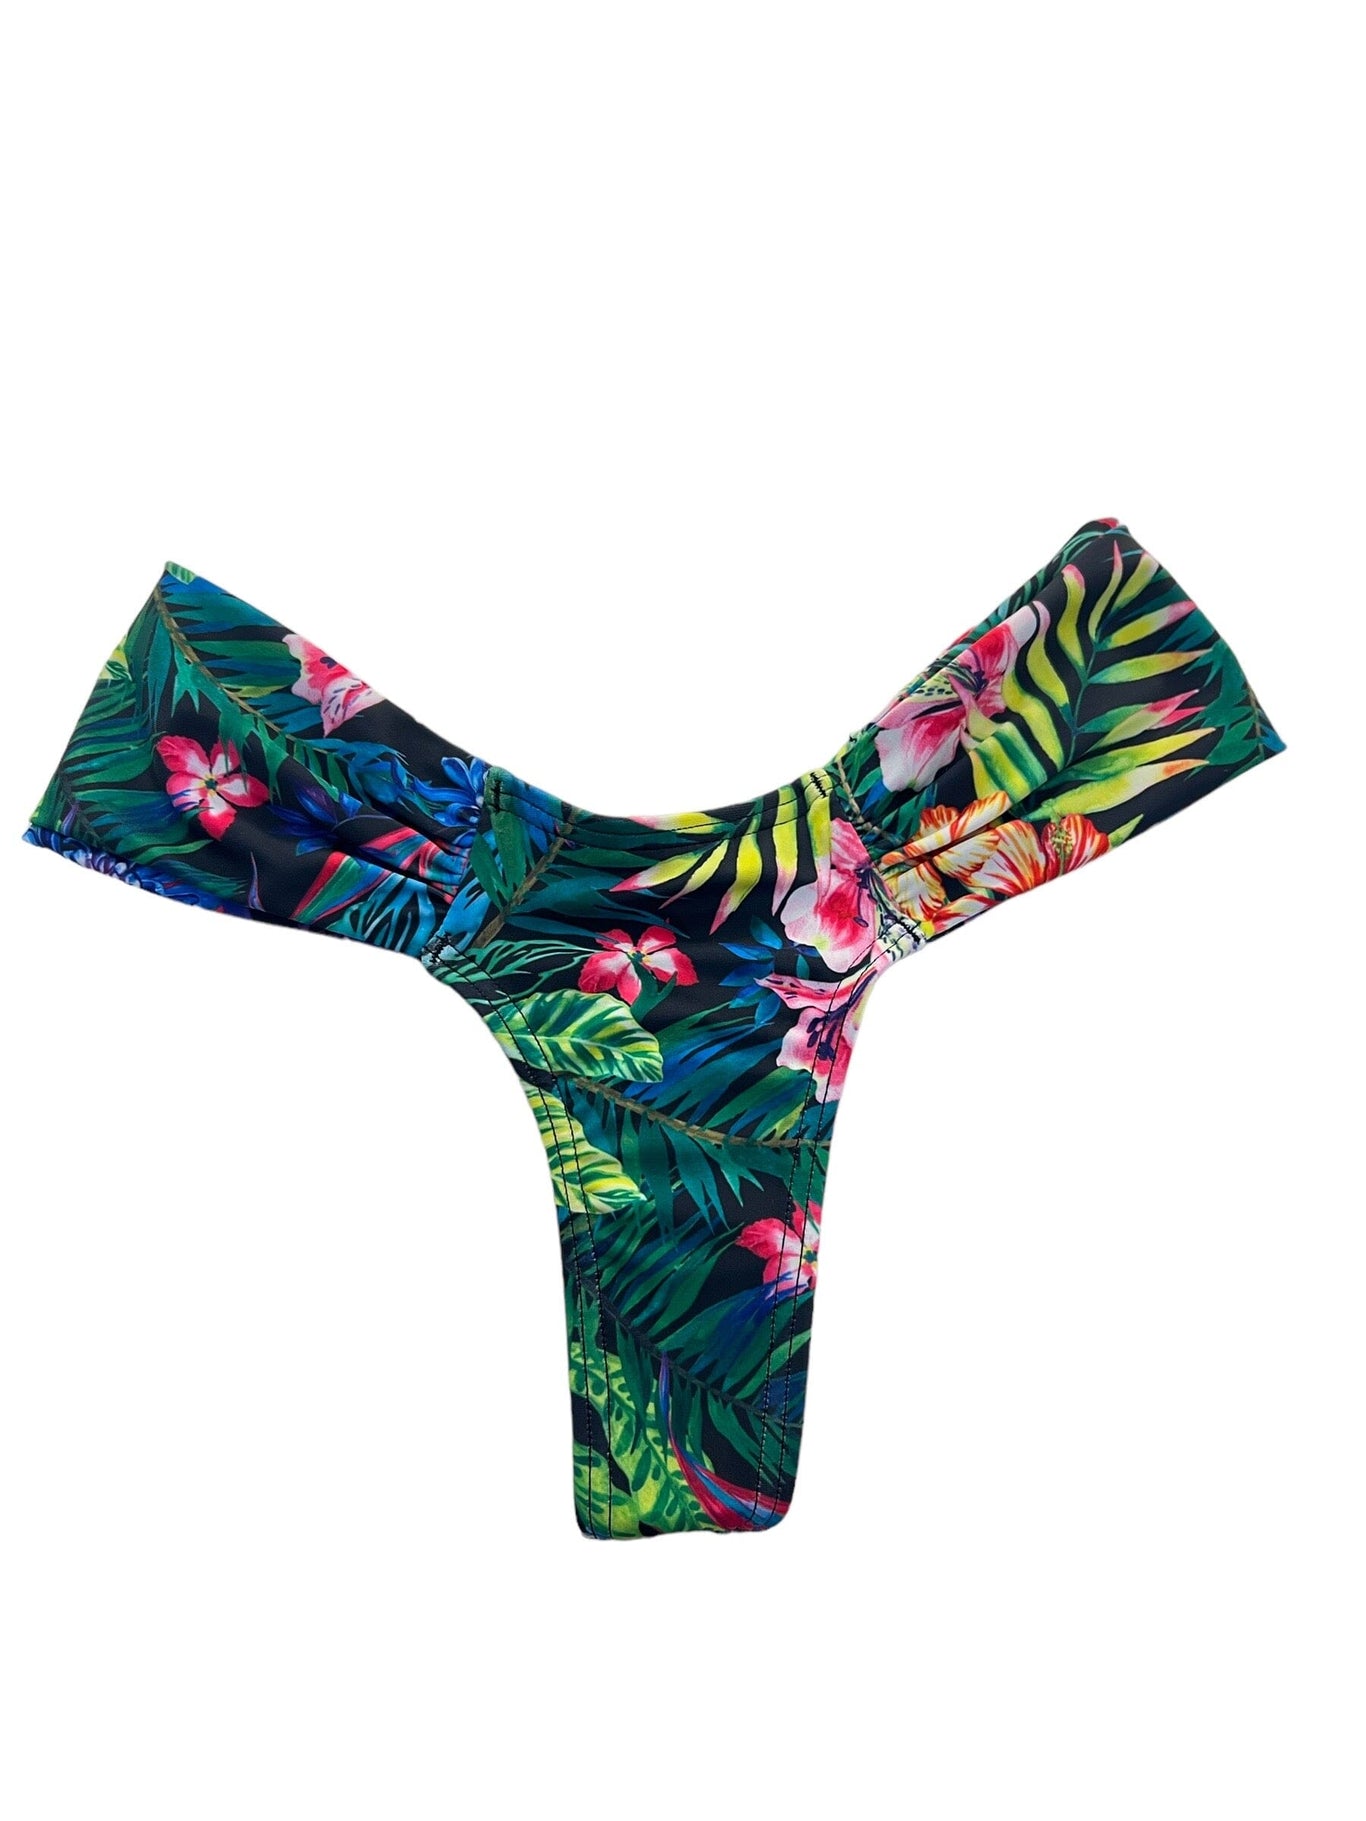 MAUI RUCHED - Berry Beachy Swimwear